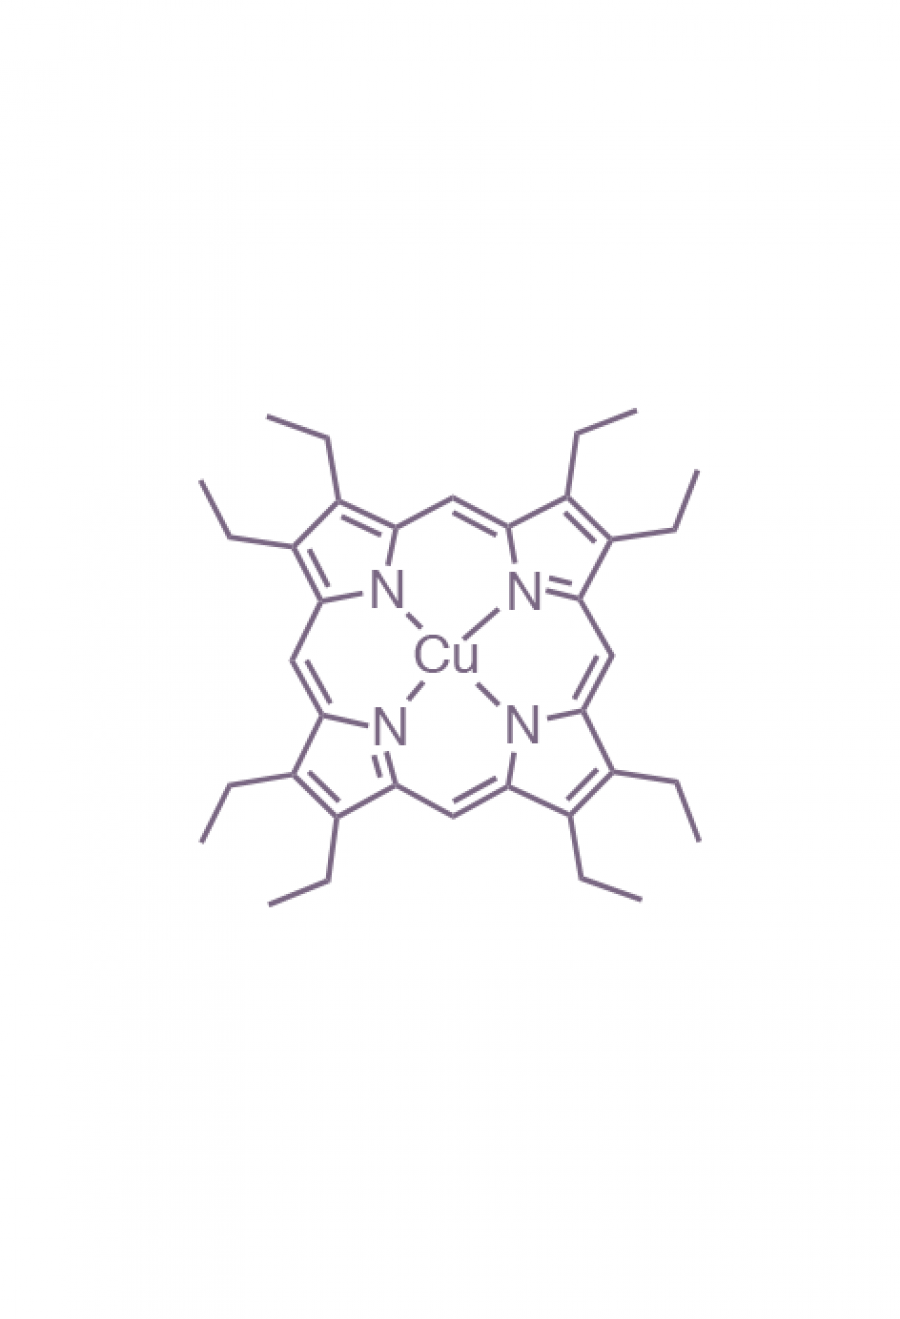 copper(II) 2,3,7,8,12,13,17,18-(octaethyl)porphyrin  | Porphychem Expert porphyrin synthesis for research & industry